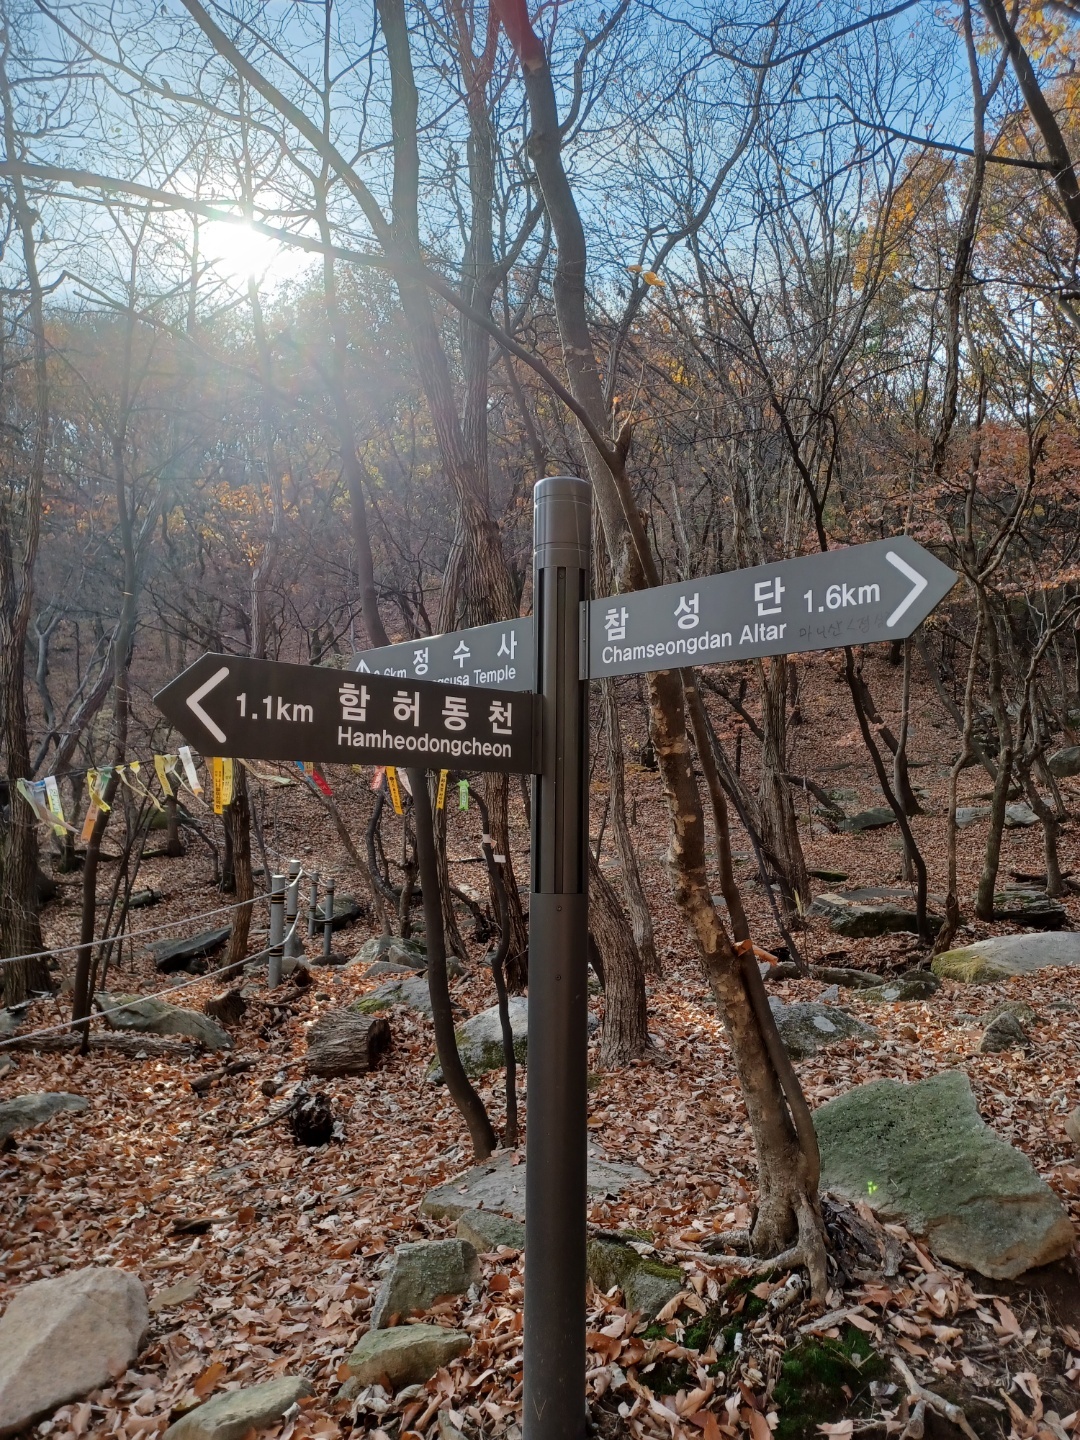 Markers point the directions for Hamheodongcheon, Chamseongdan and Jeongsusa. (Lee Si-jin/The Korea Herald)